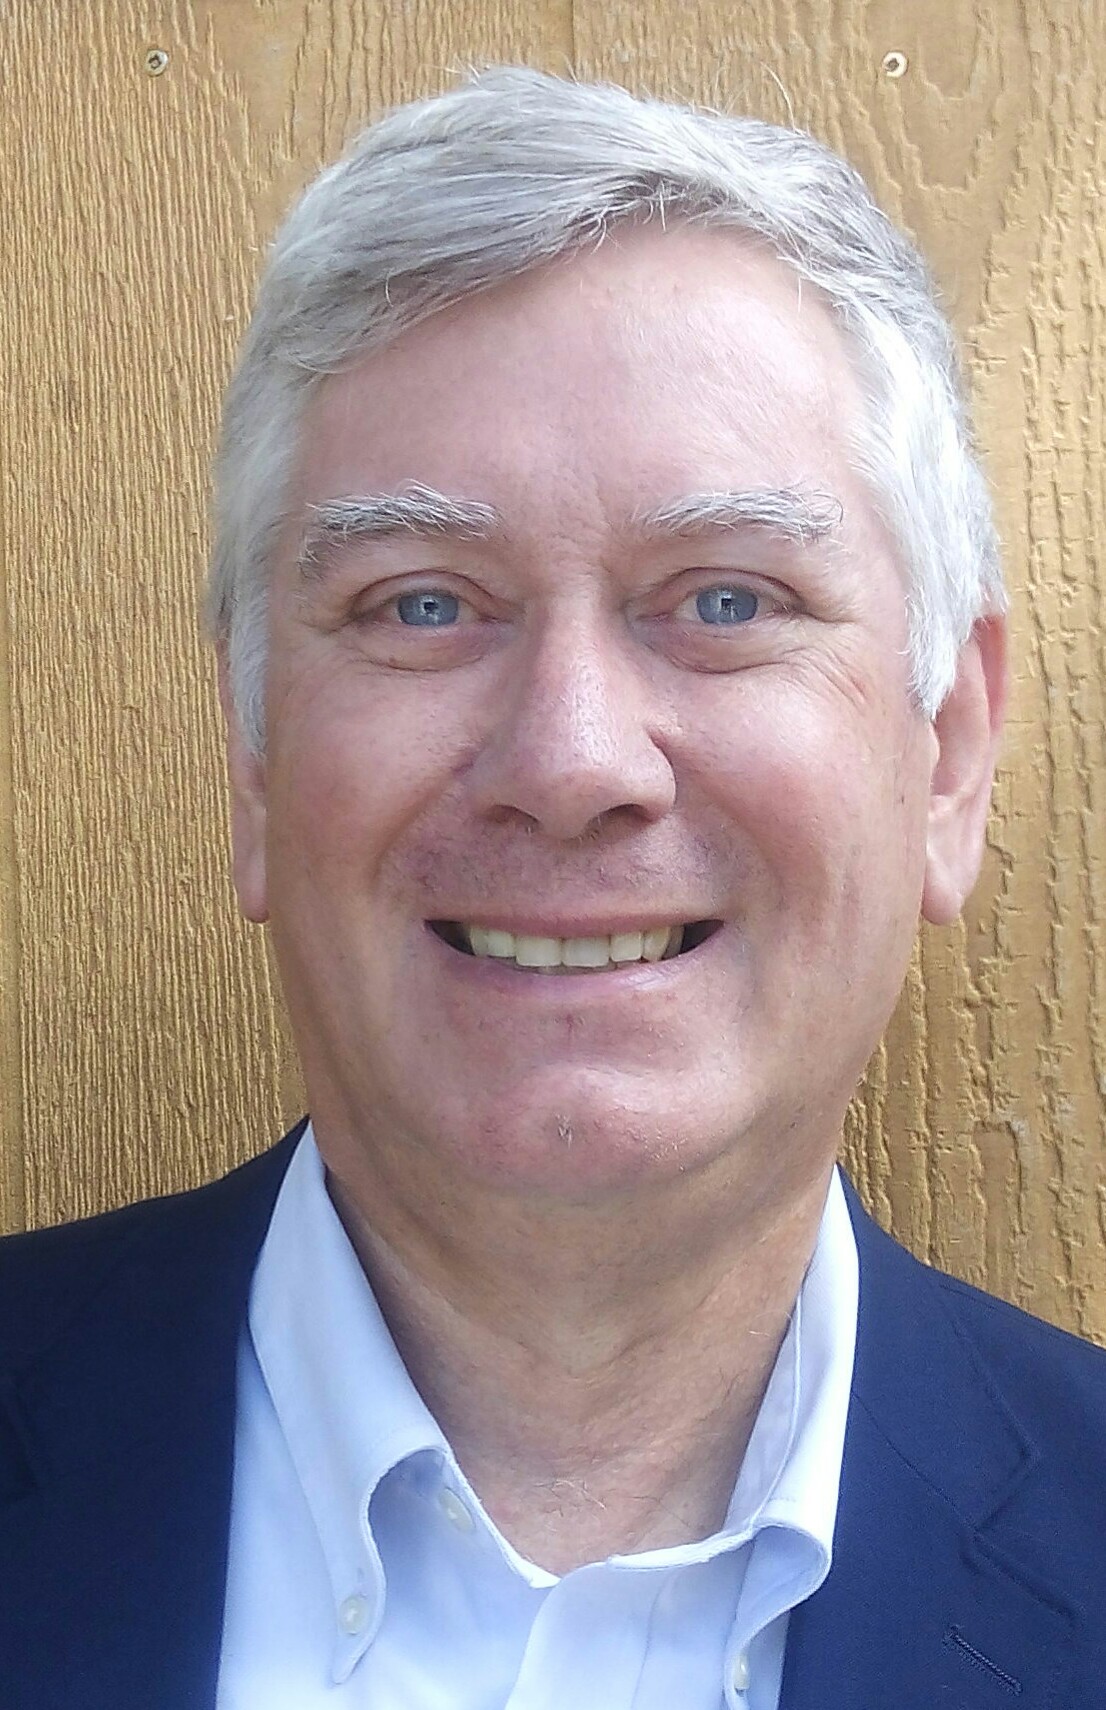 George Chapman is running for mayor of Salt Lake City in 2015.